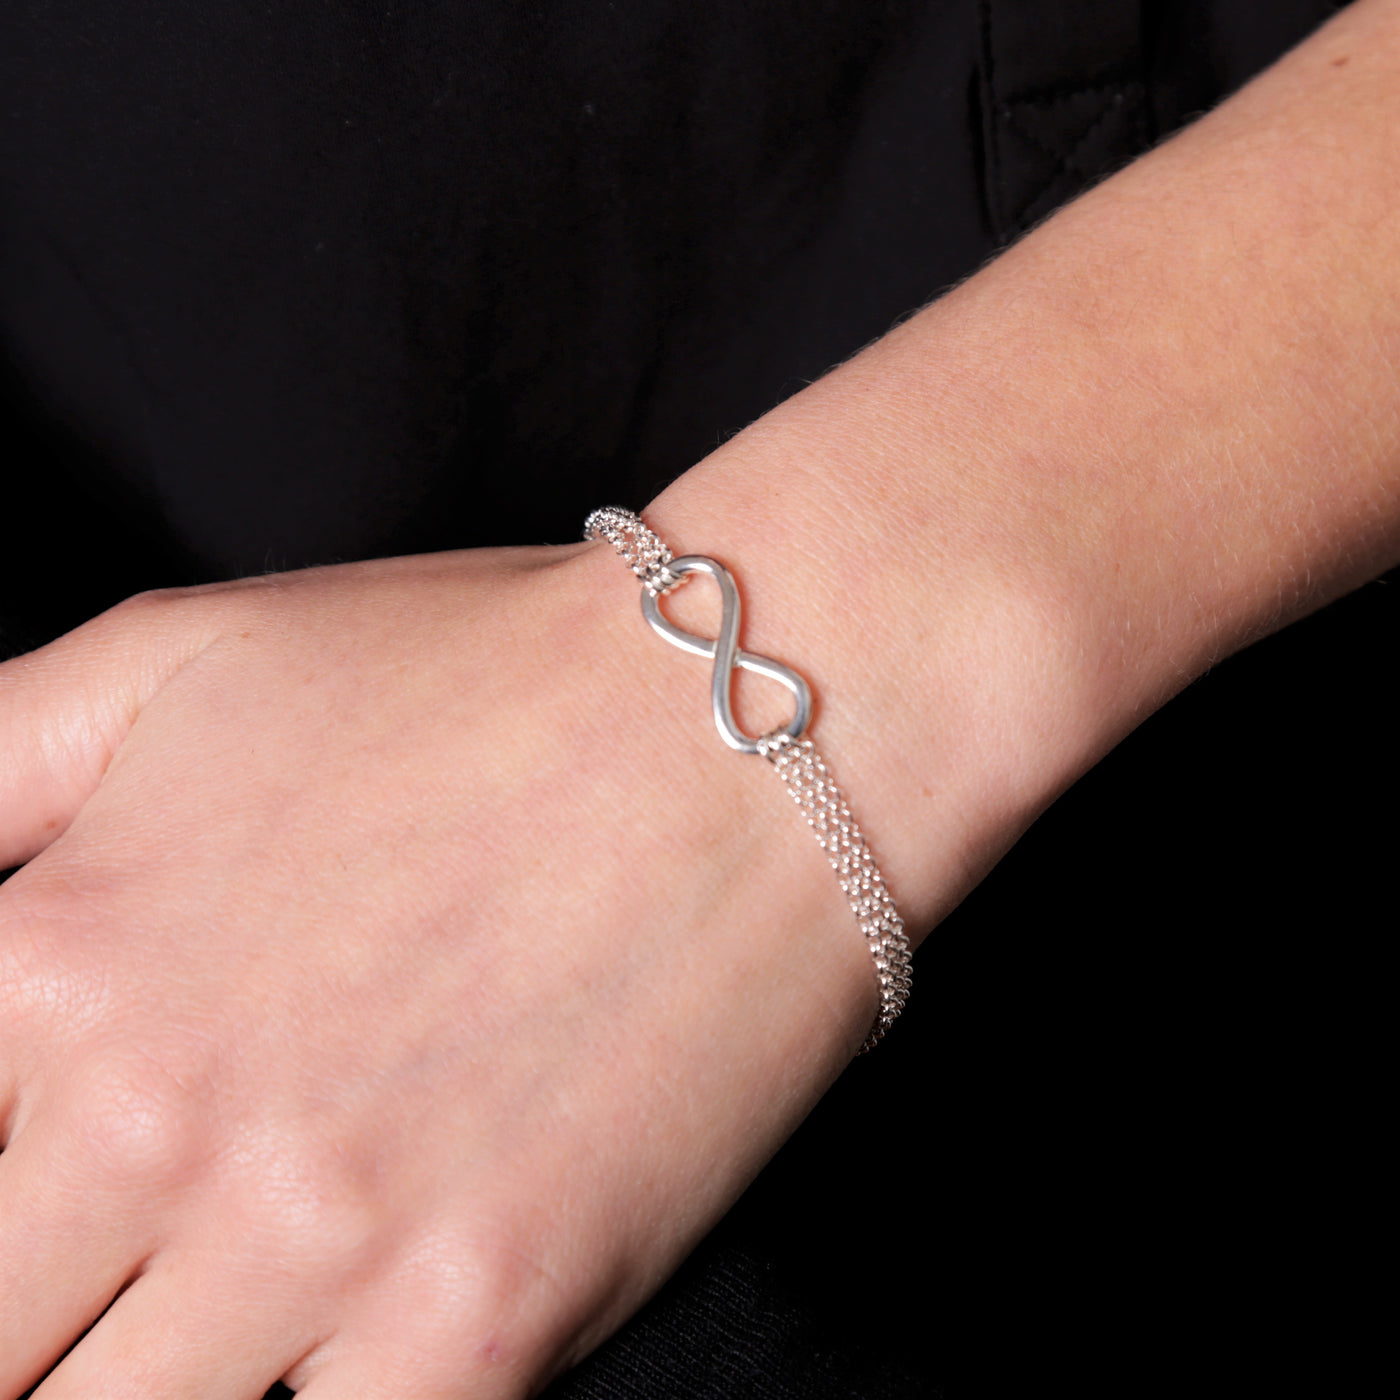 Sterling silver infinity multi strand bracelet